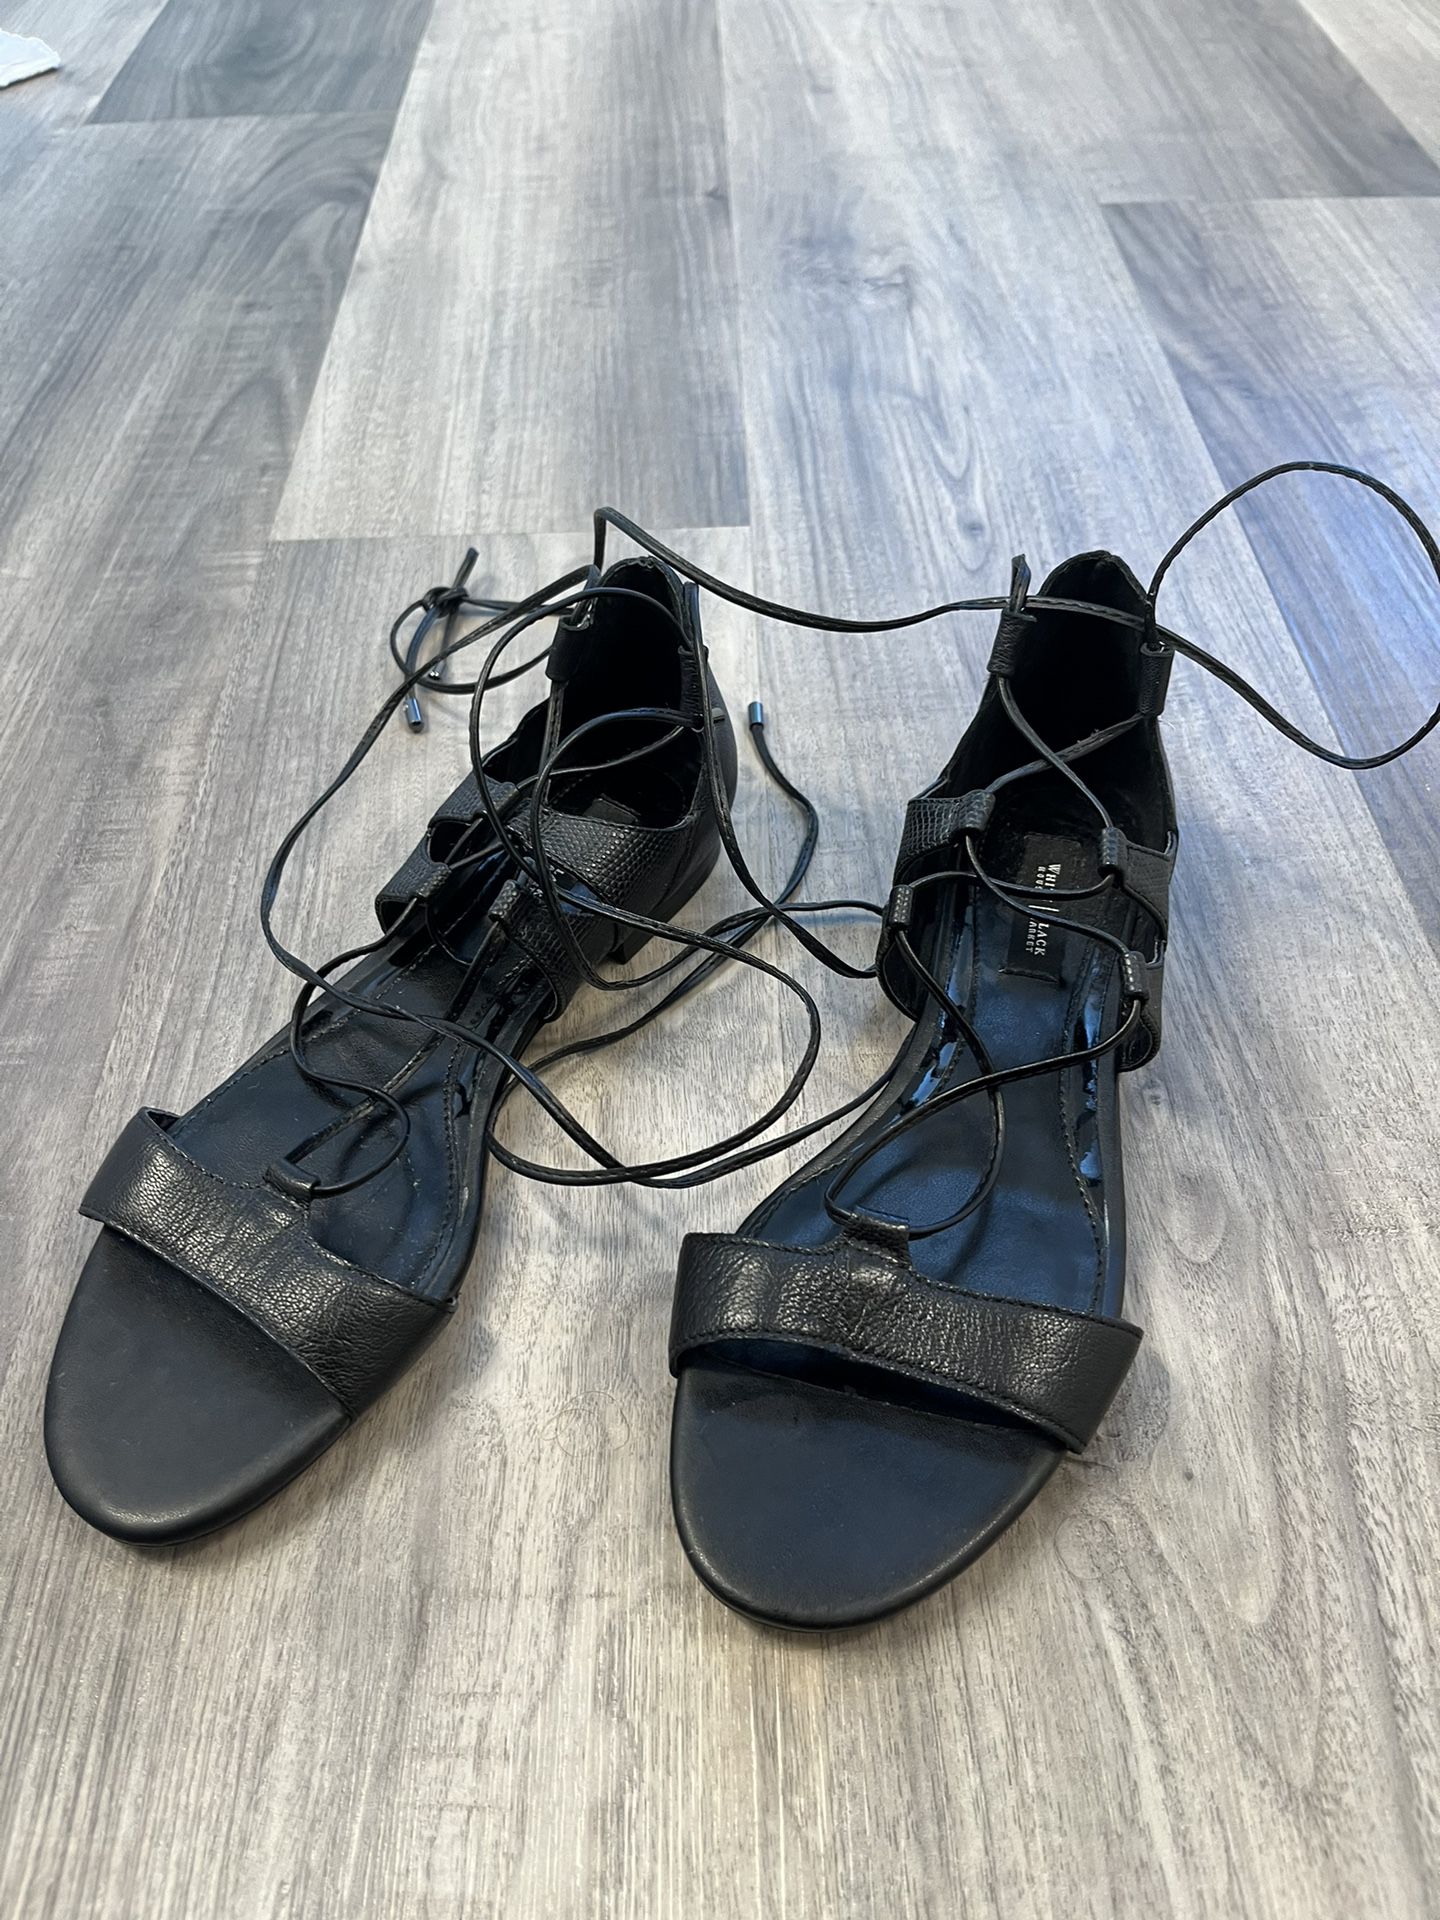 White House Black Market Gladiator Wrap Style Sandals (Size 8M)